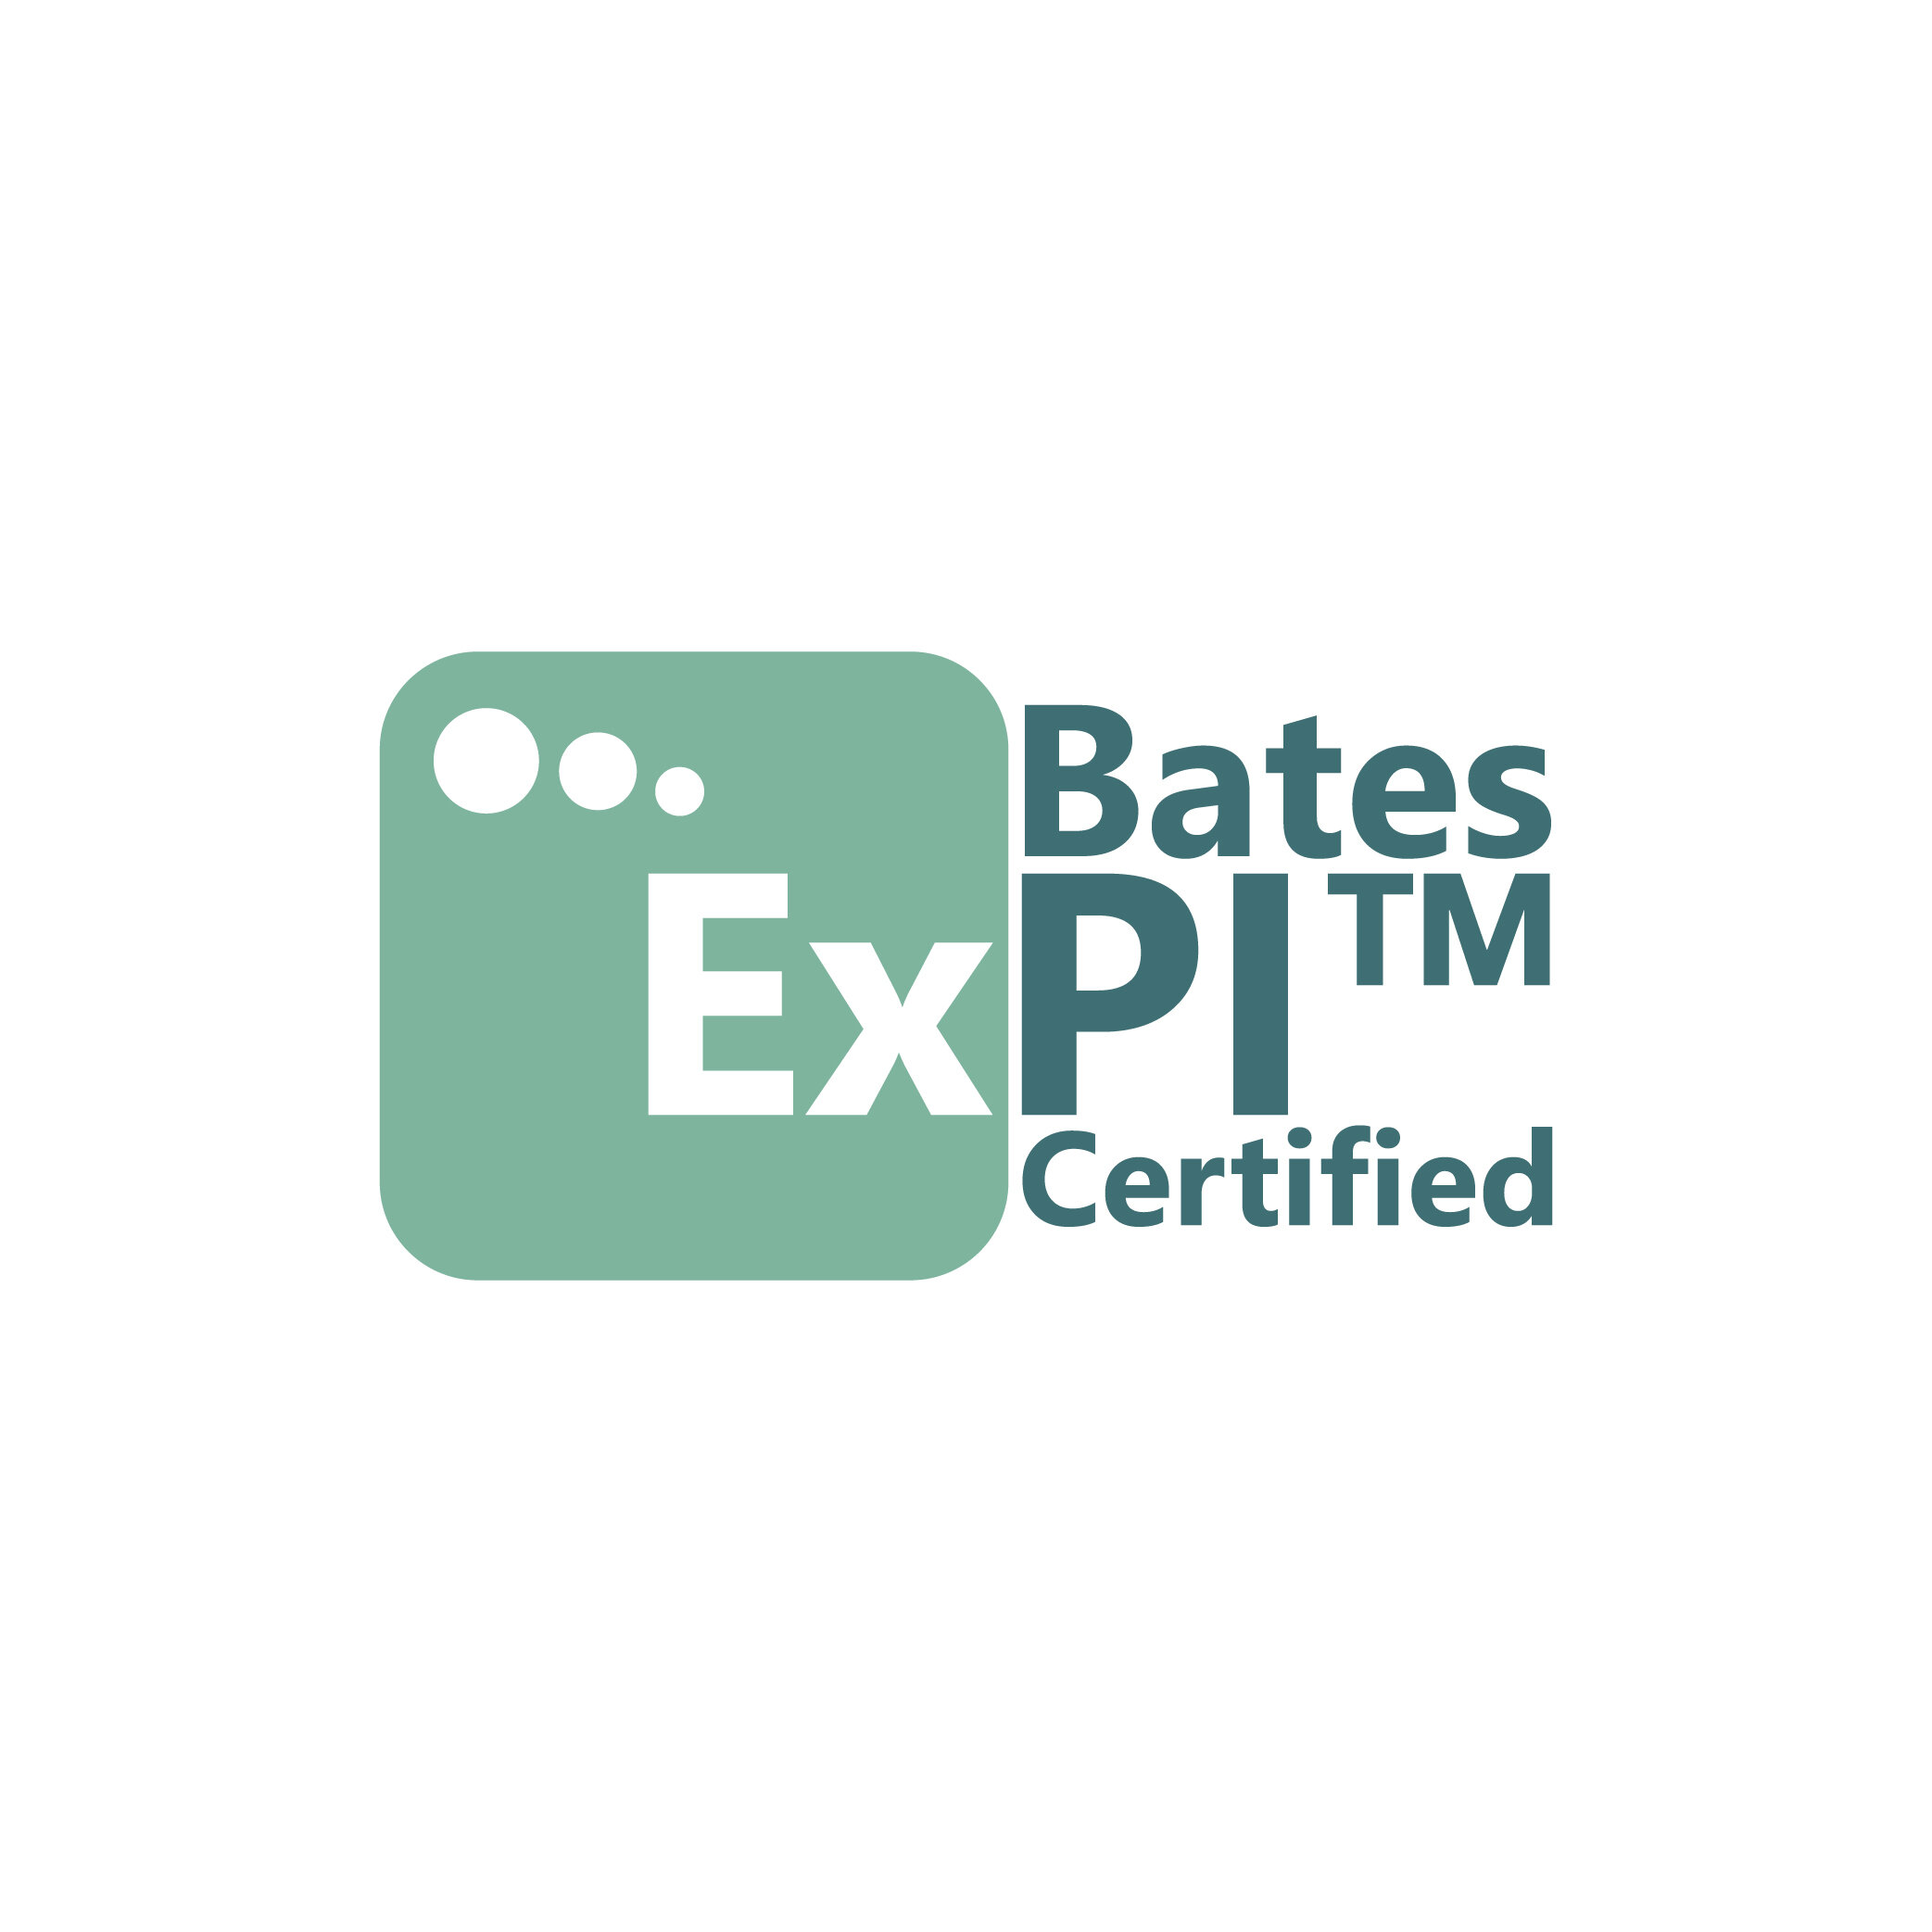 Bates ExPI Certified-01-01.jpg